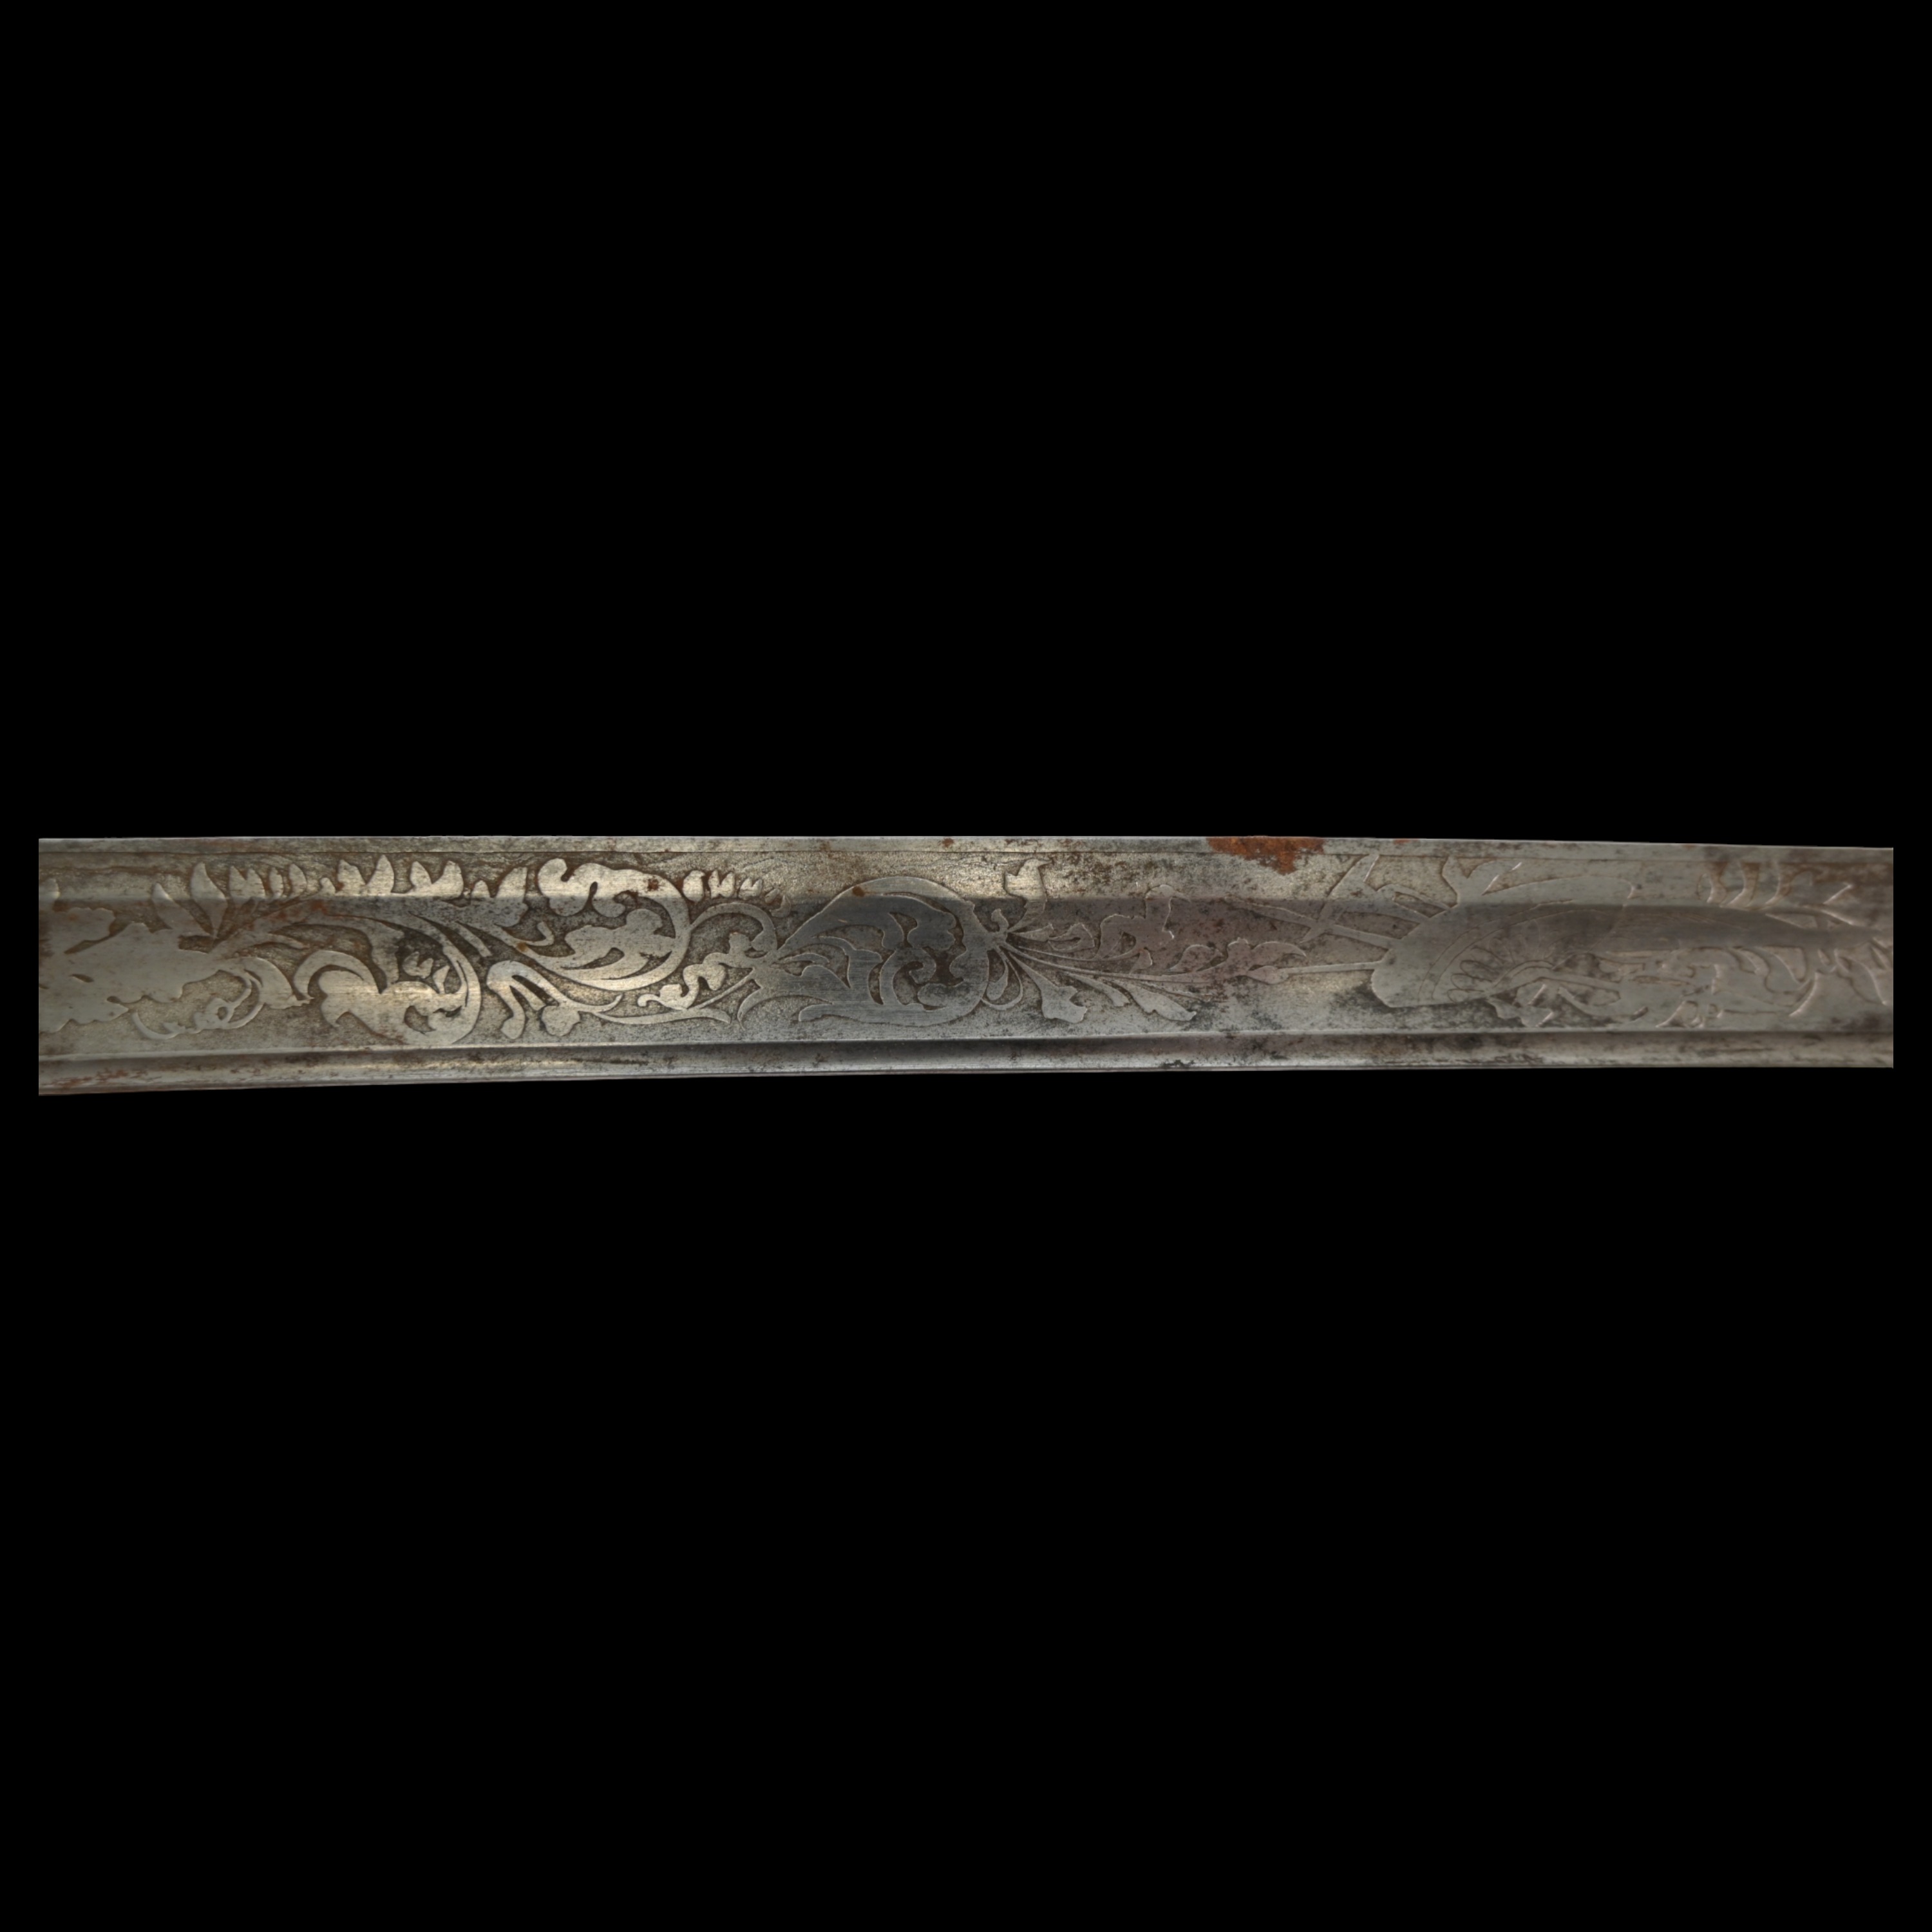 Civil War period M1850 foot officer's sword, Klingenthal belonged to Capt. S. Zuschlag. - Image 12 of 17